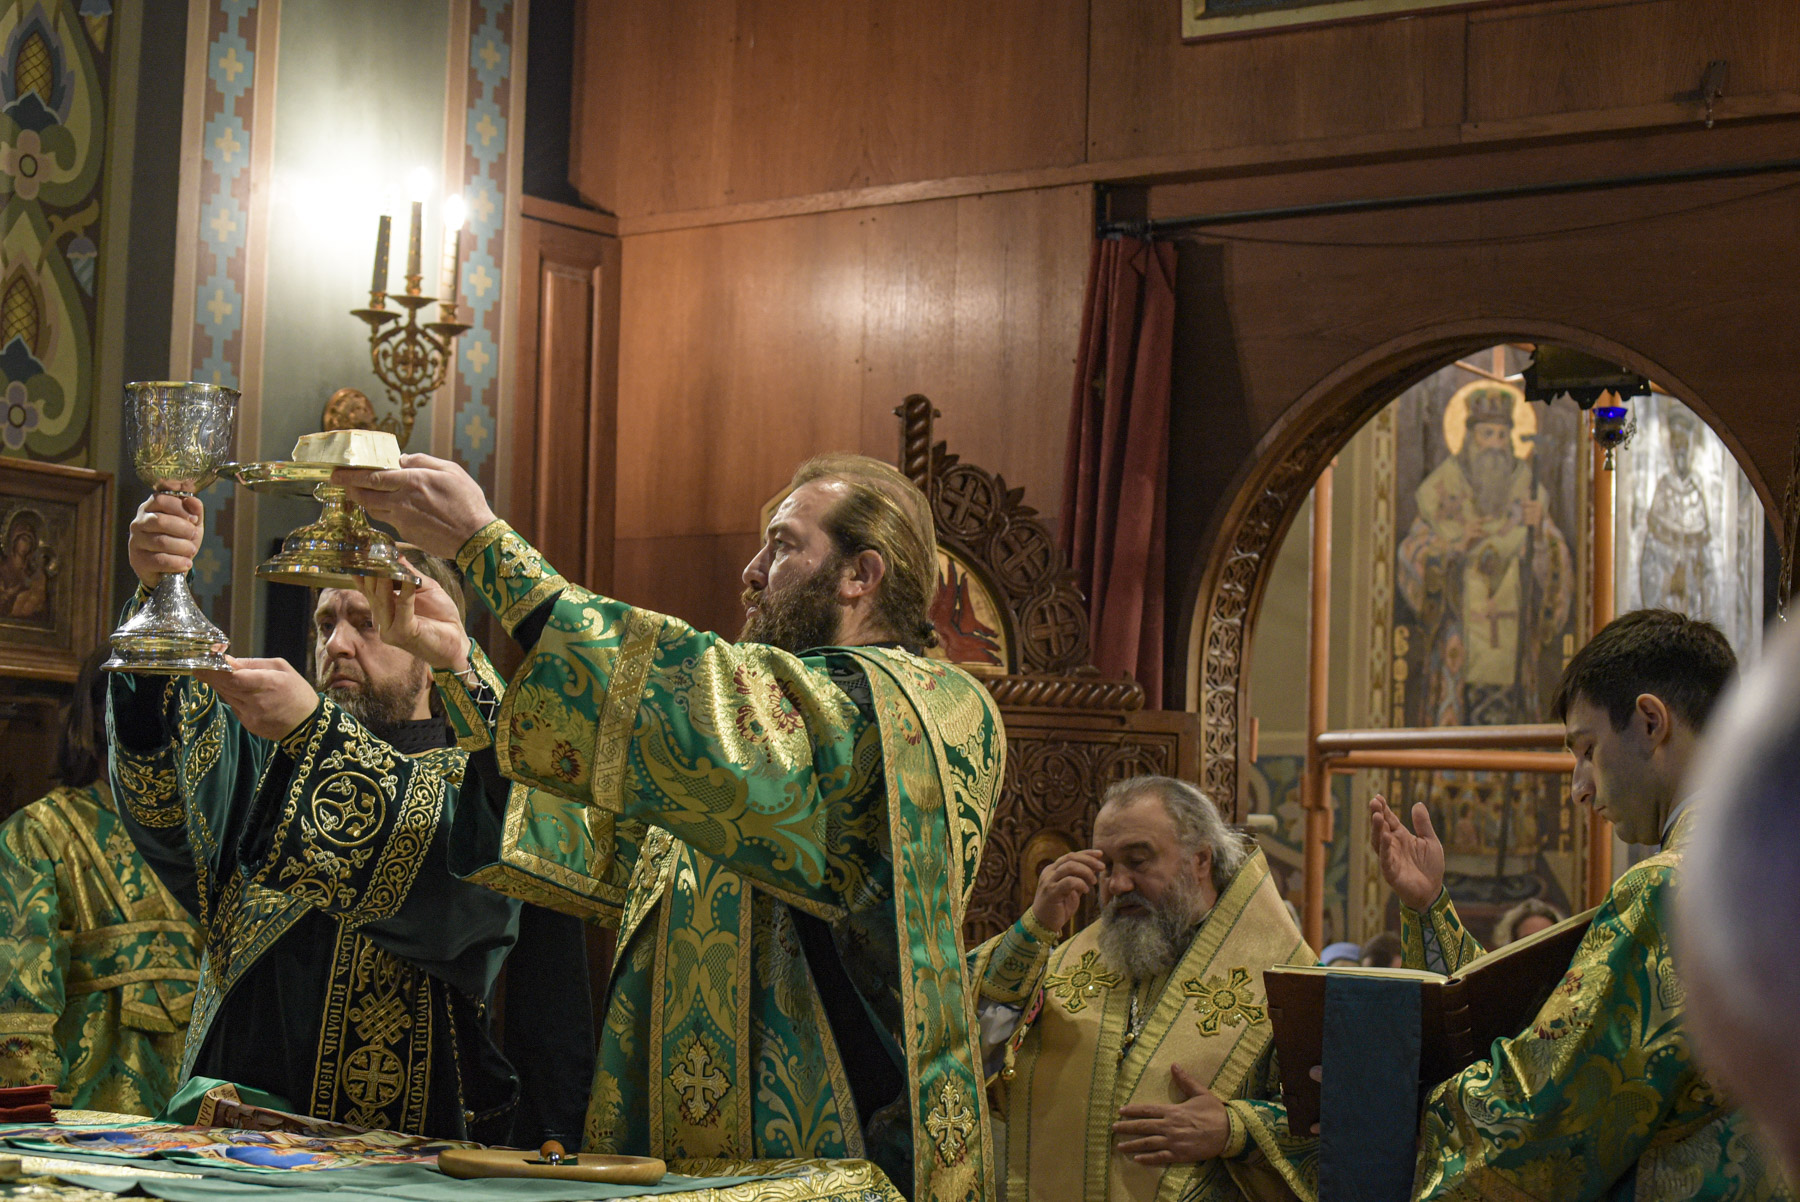 photos of orthodox christmas 0196 2